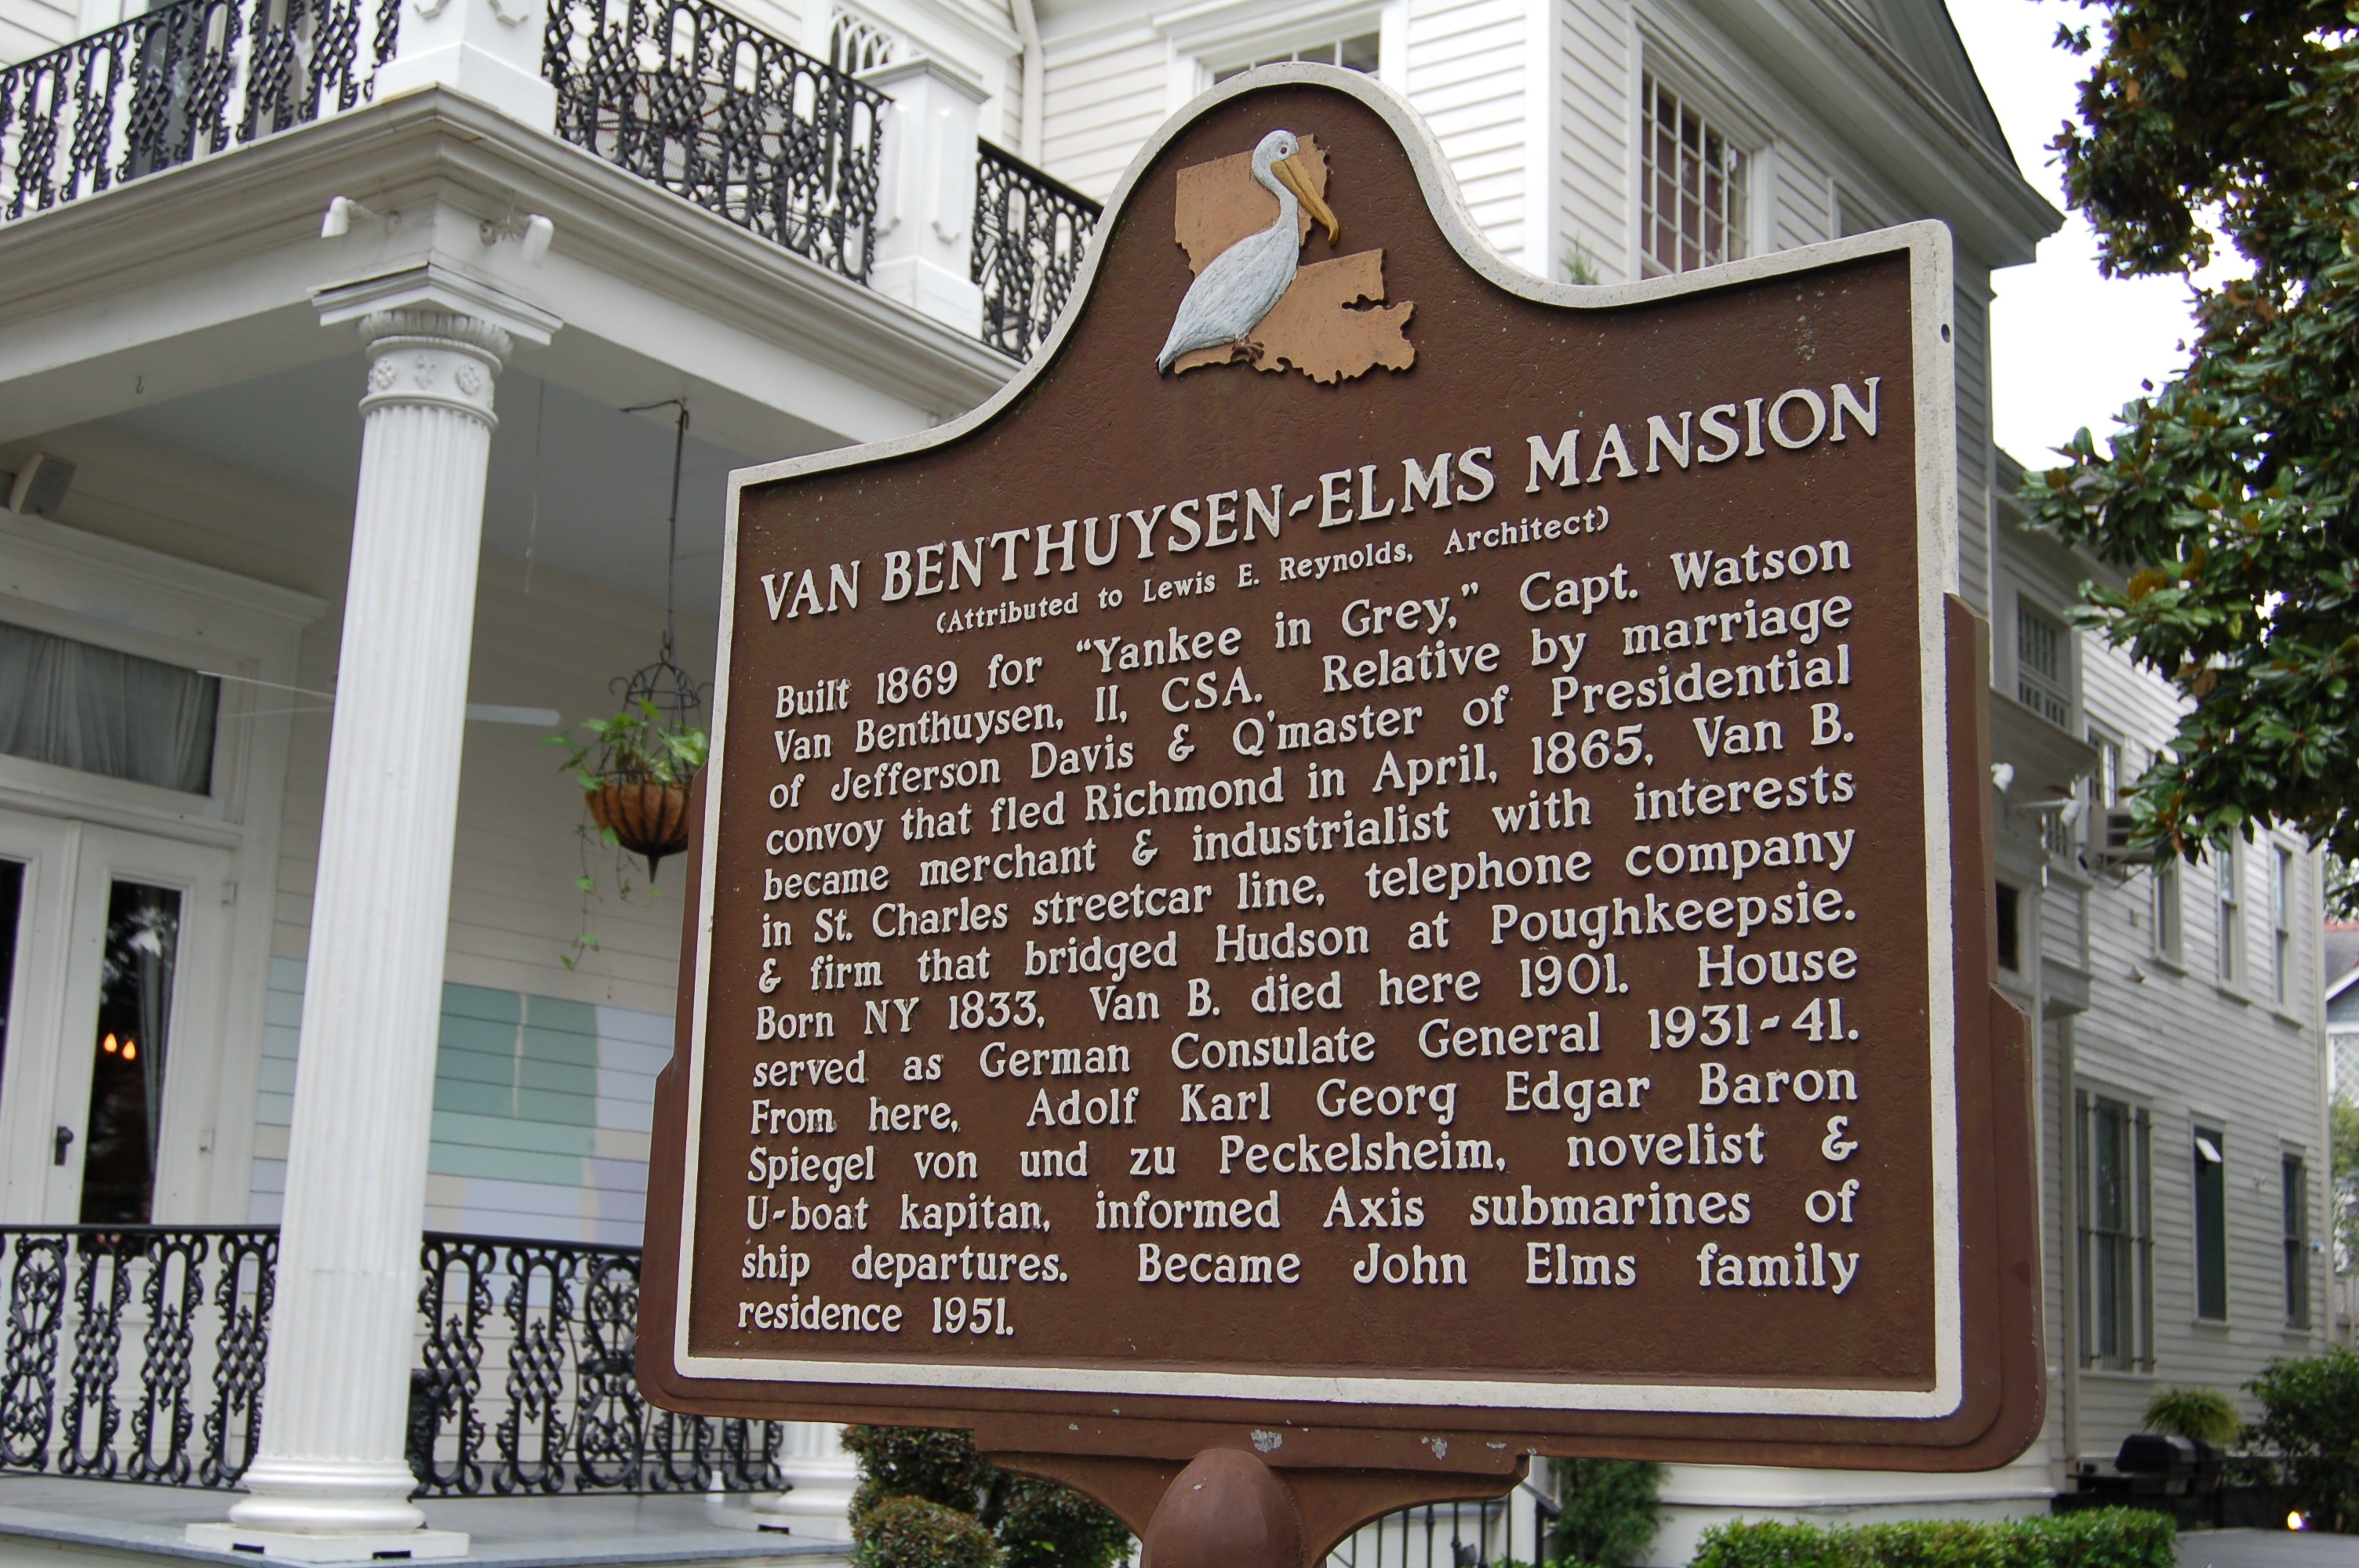 Van Benthuysen - Elms Mansion Marker